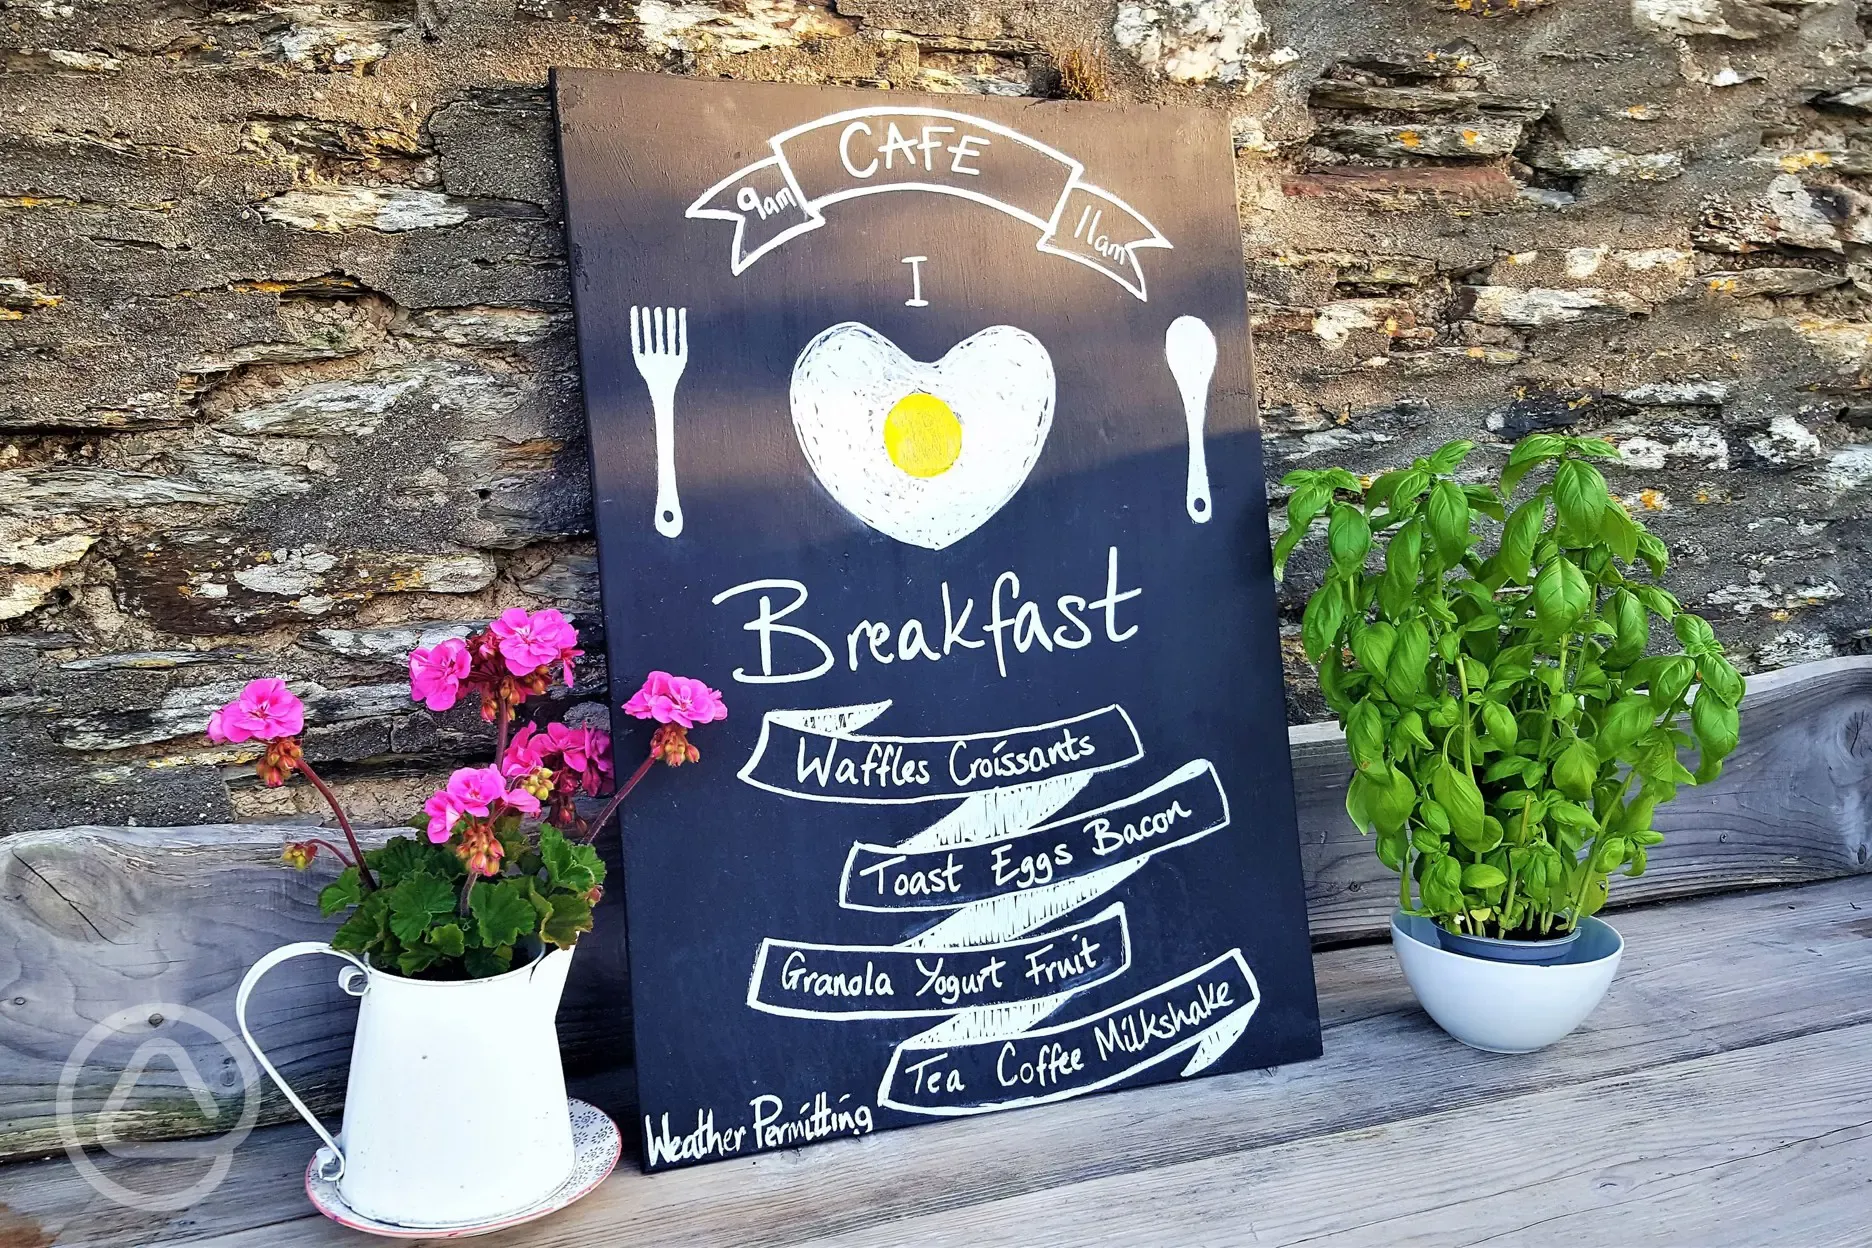 Cafe: pop up breakfast days